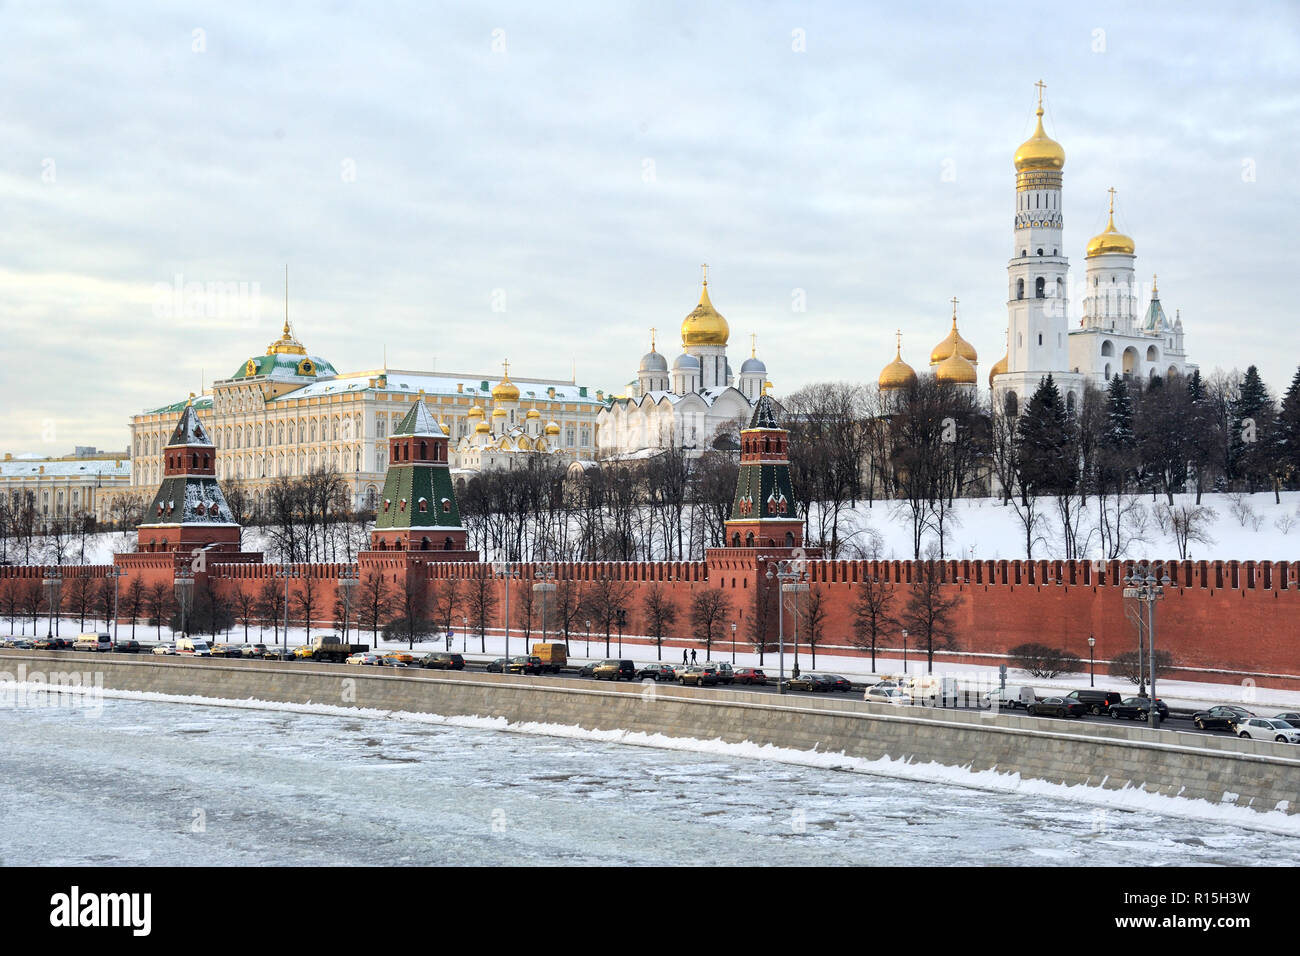 The Kremlin Embankment in Winter Stock Photo